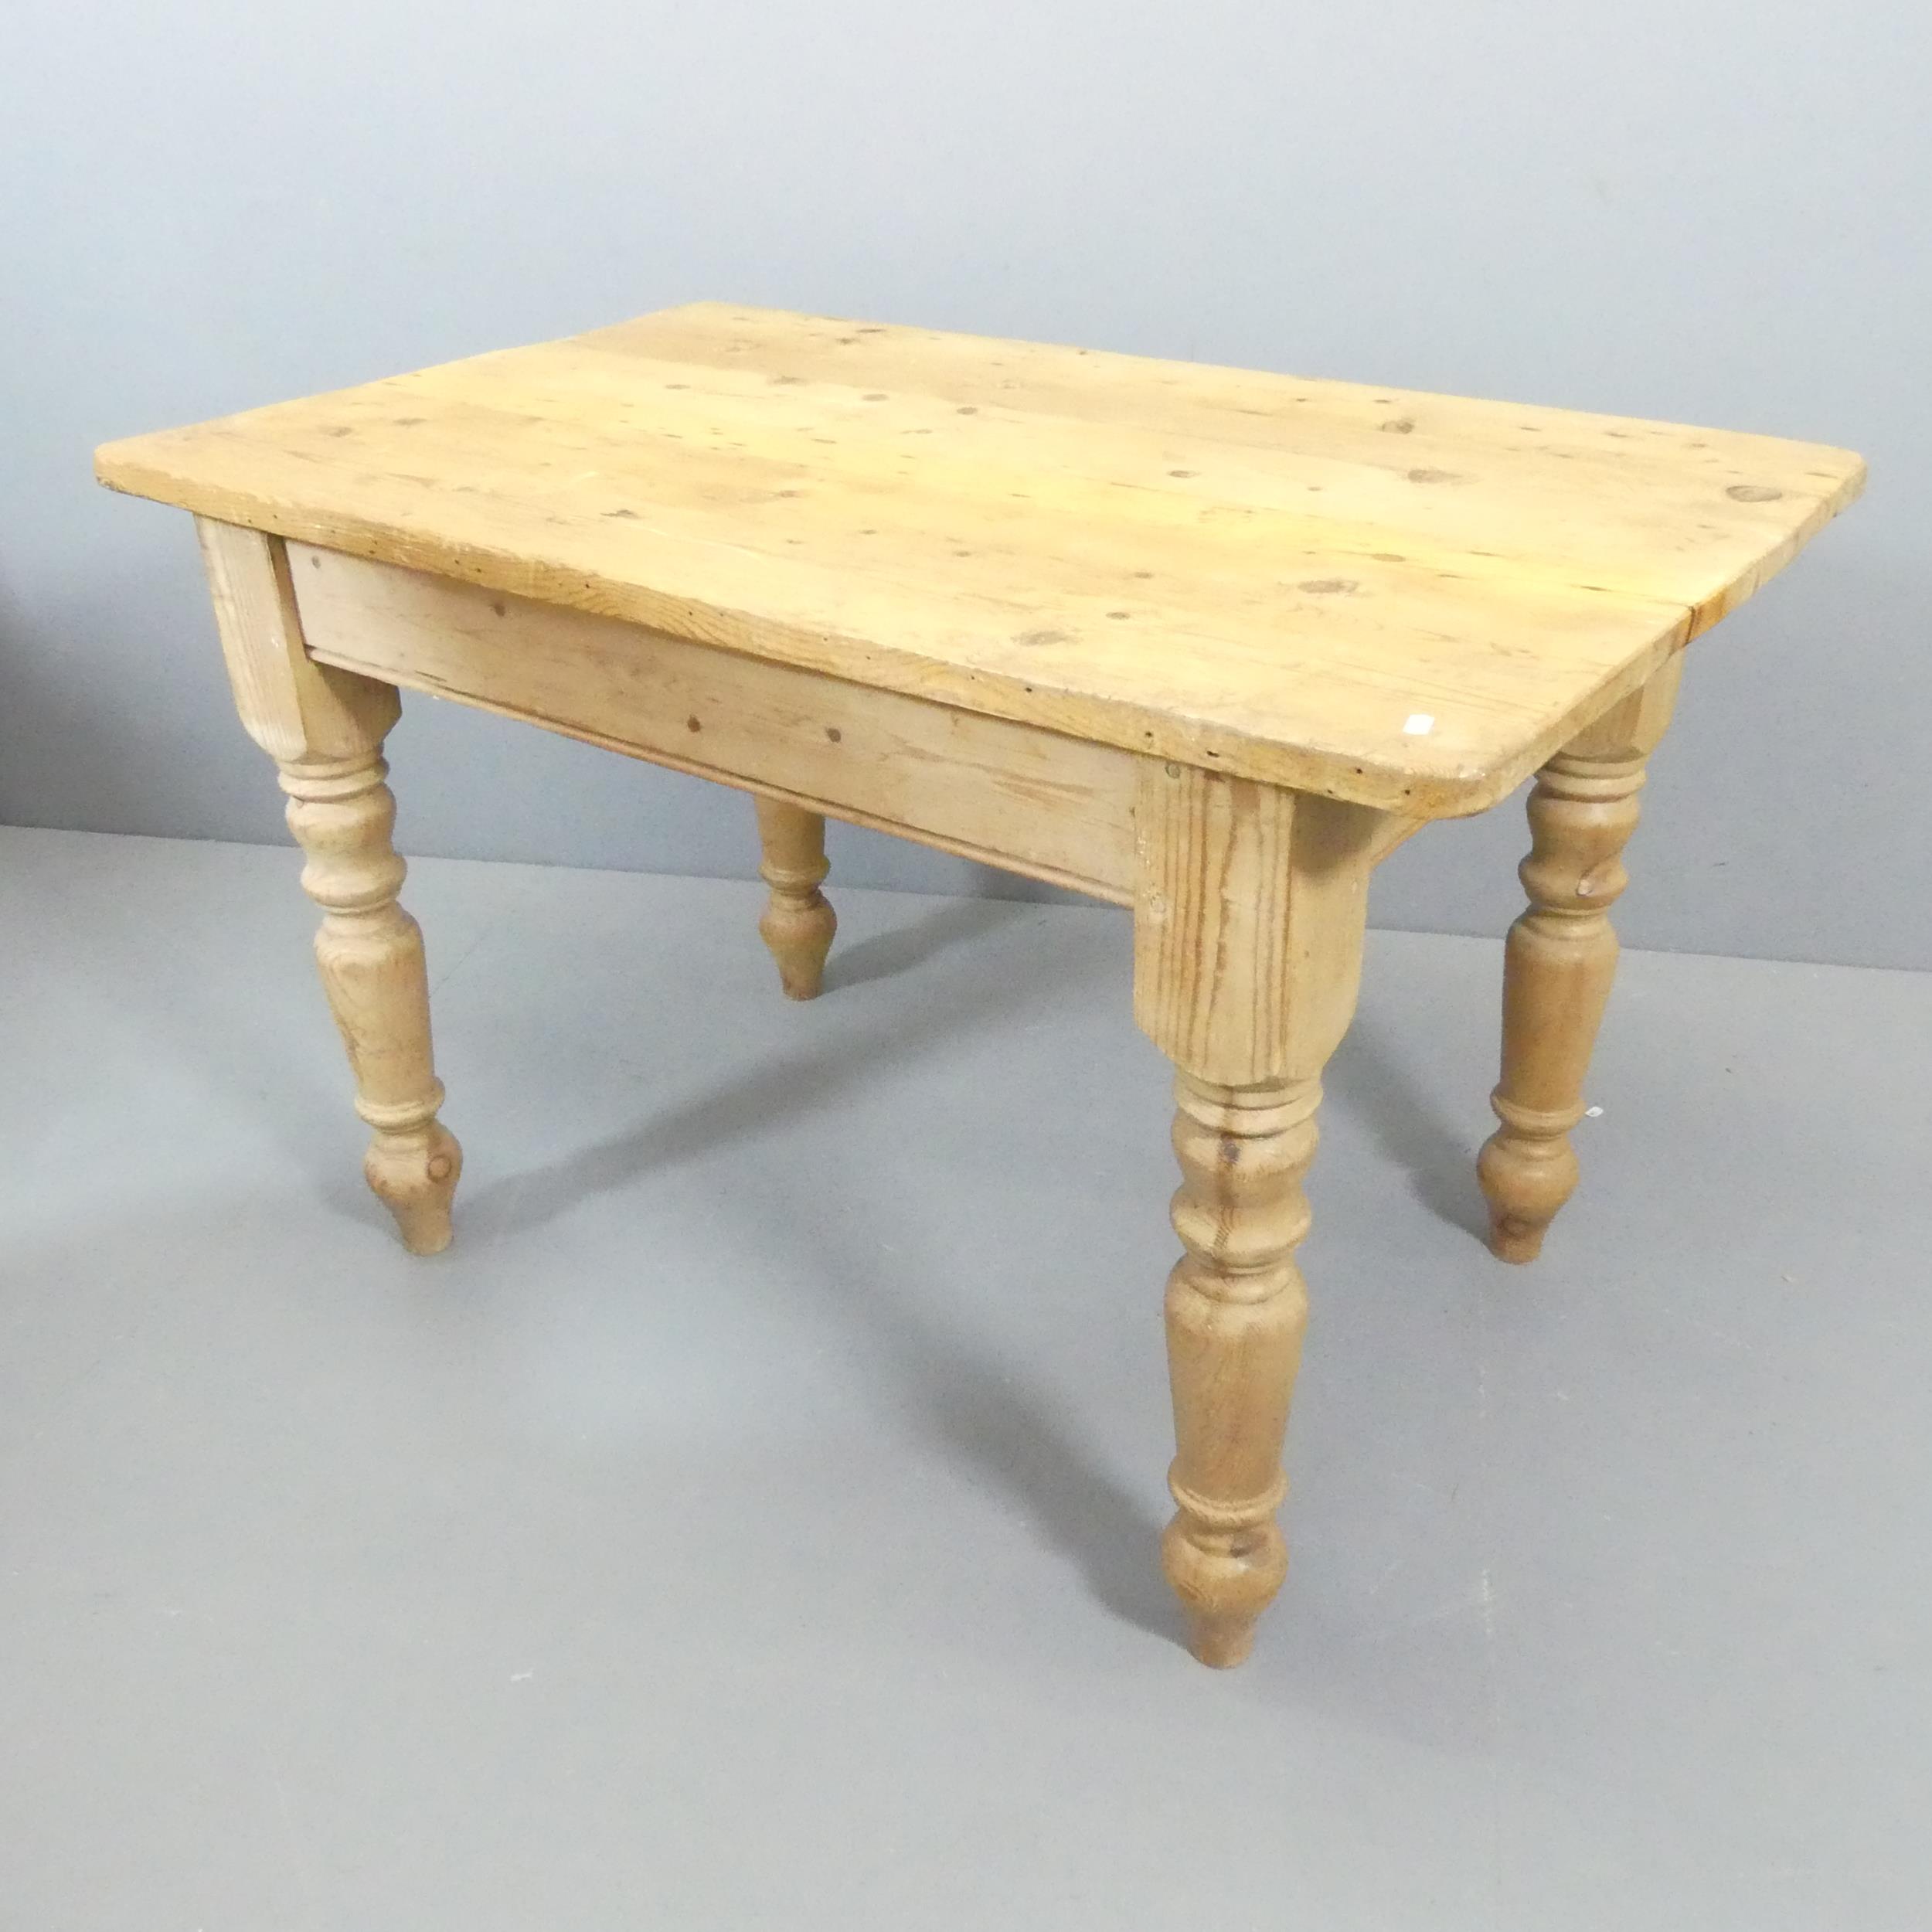 A pine farmhouse kitchen table. 120x77x74cm.